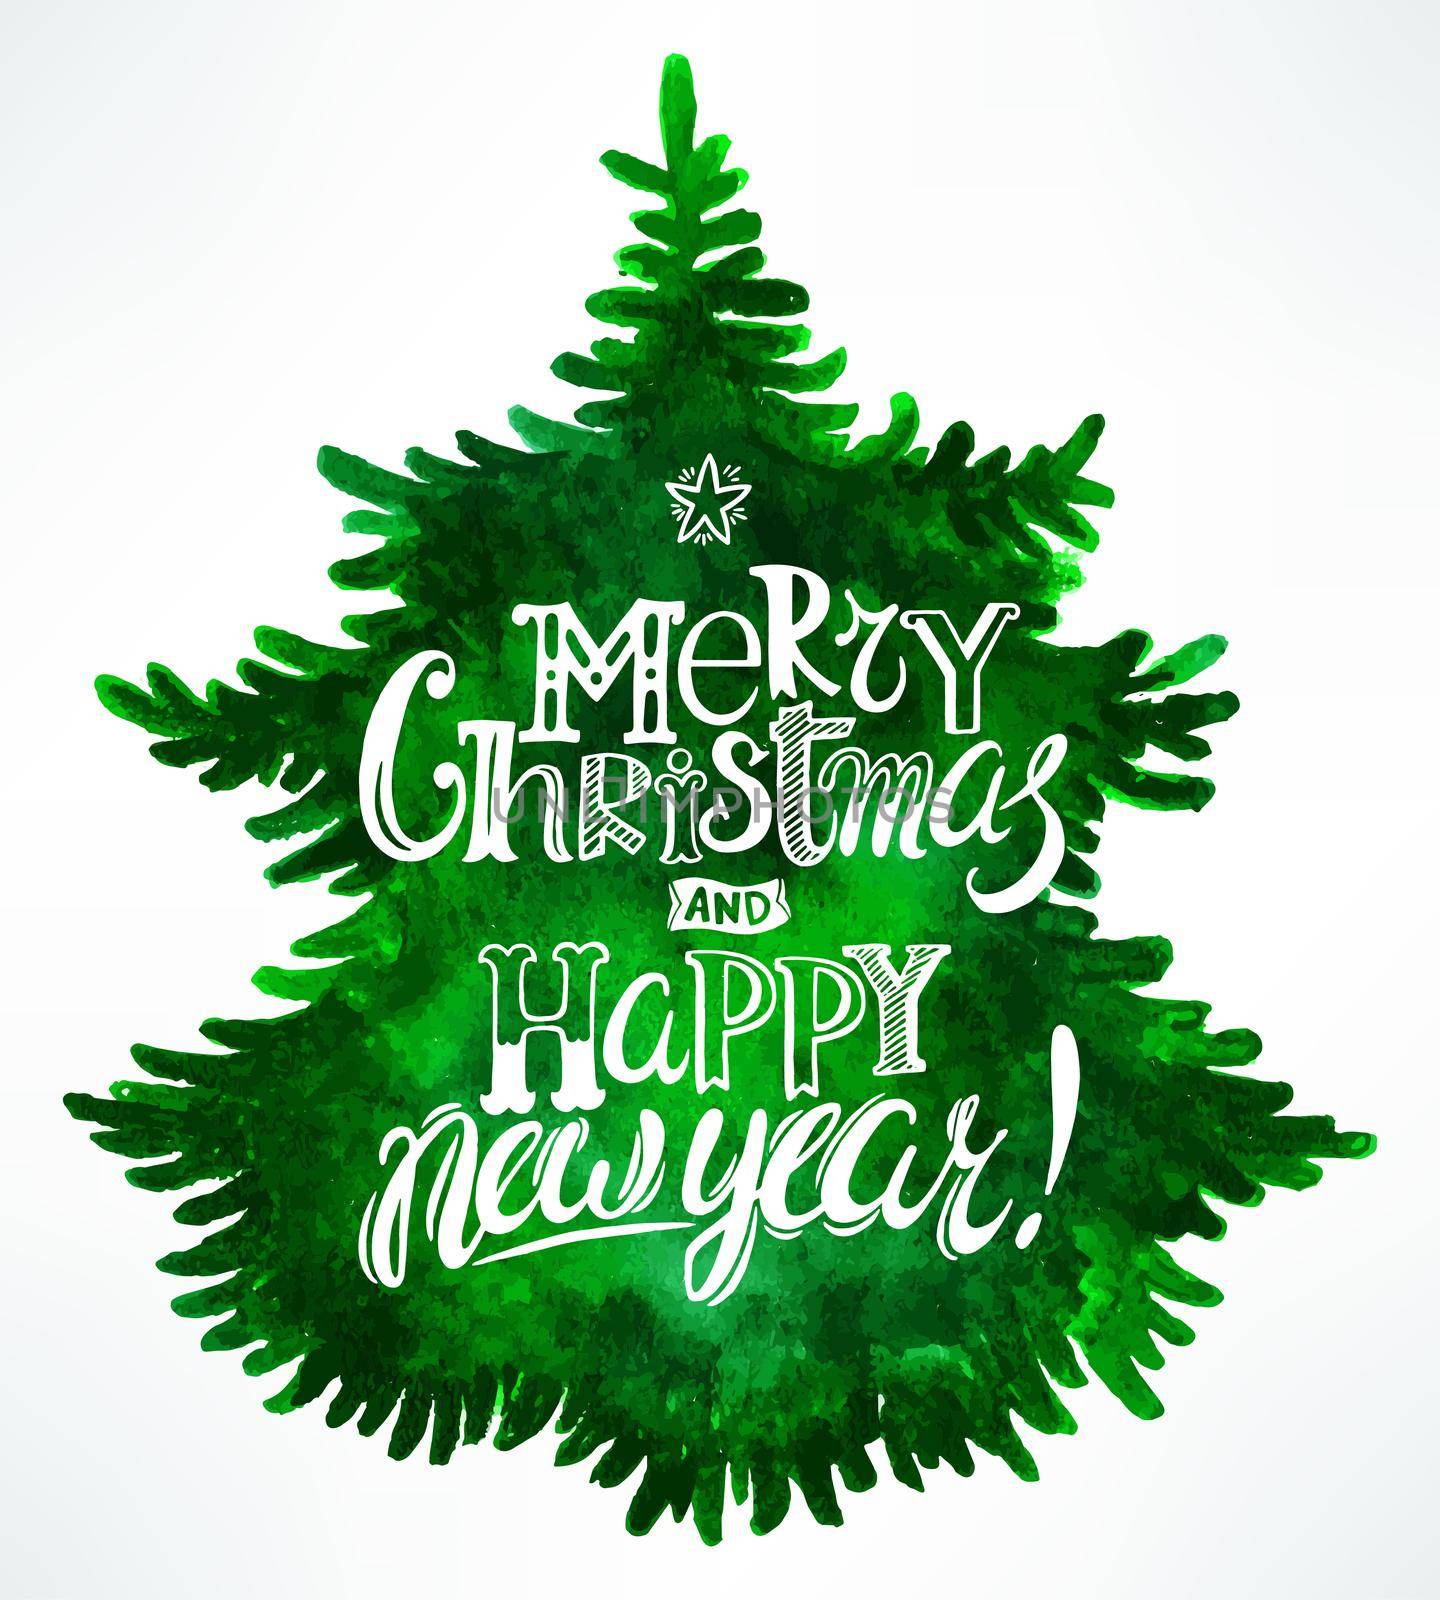 Christmas greetings and tree by melazerg